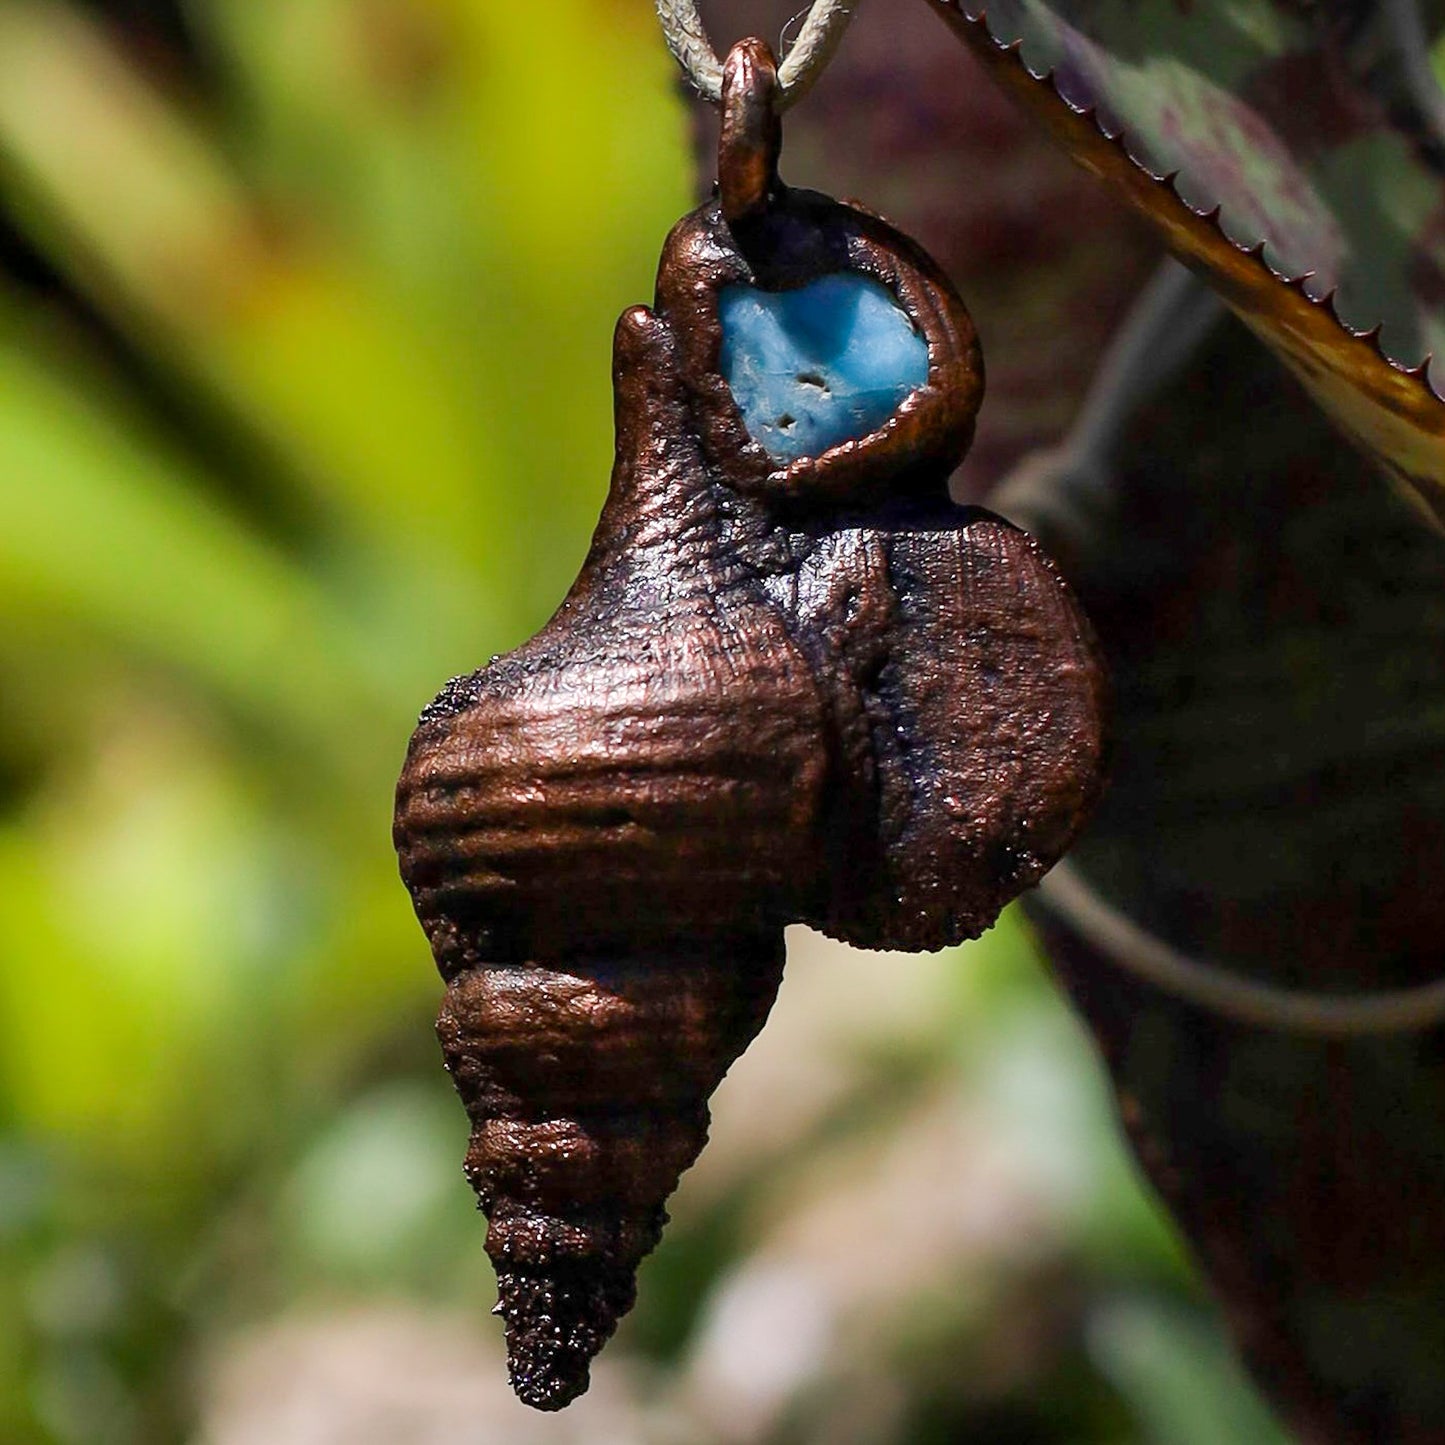 Florida Fossil Fusinus Shell Necklace Copper Pendant